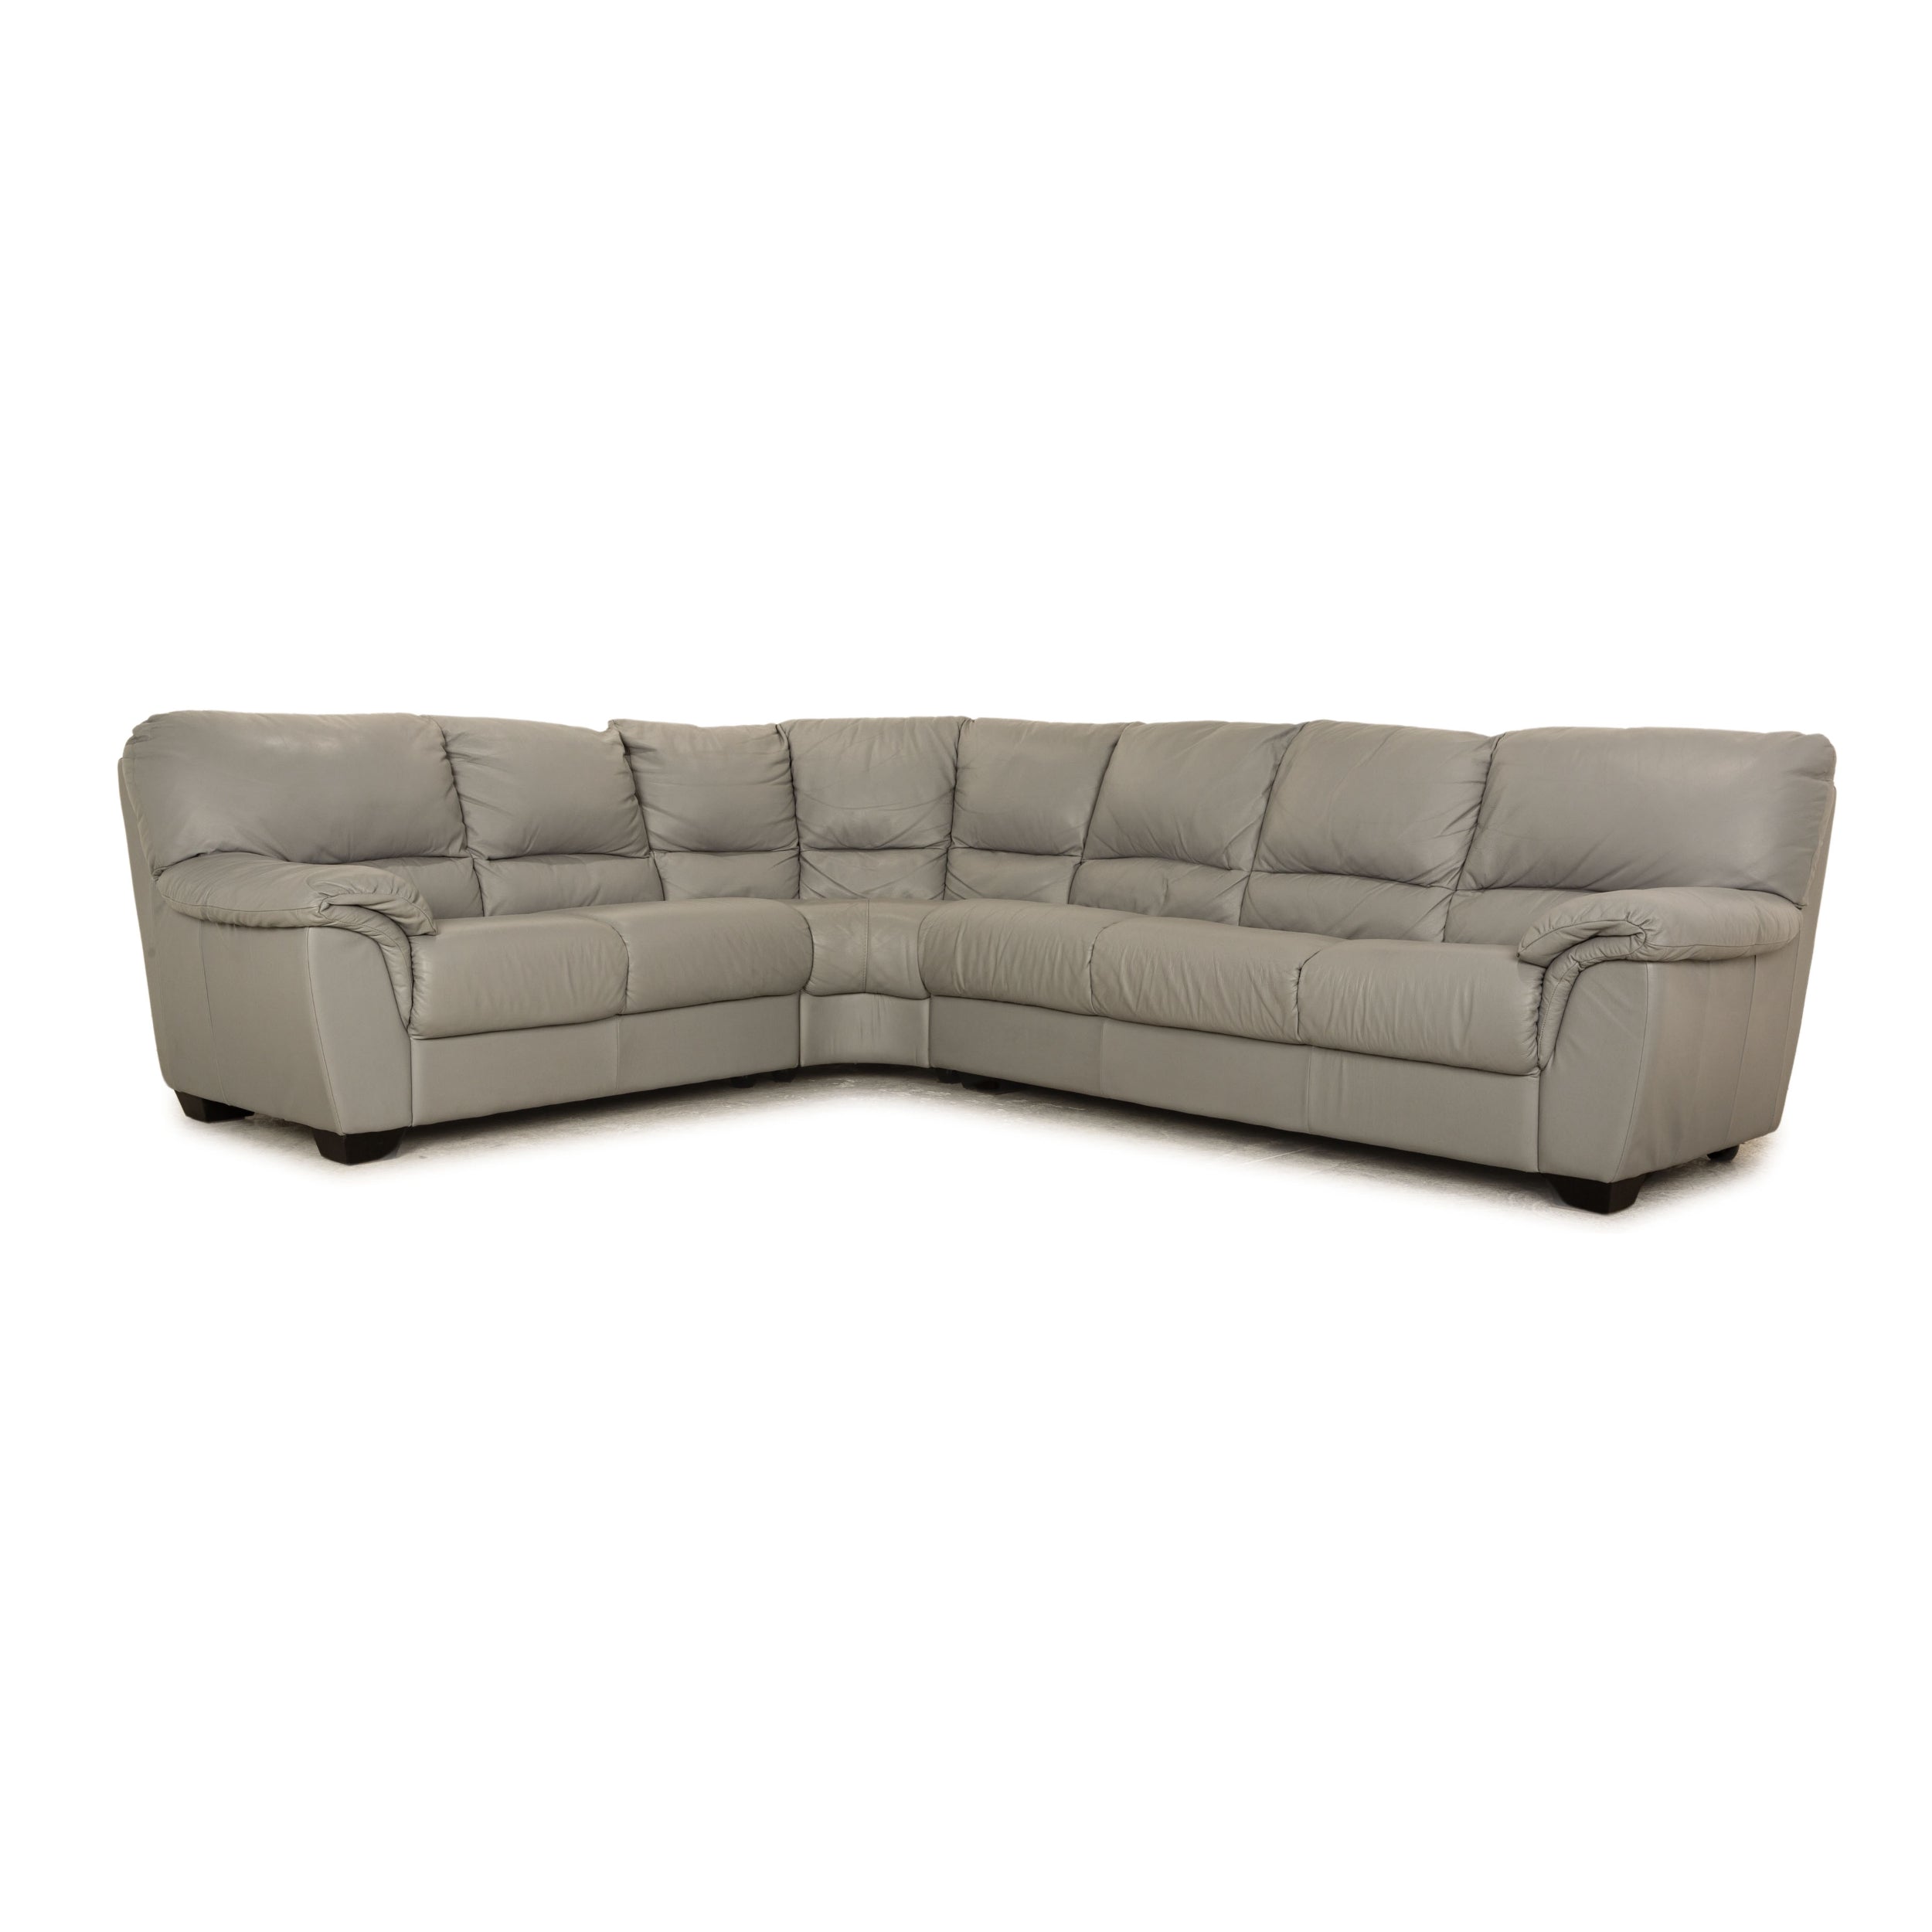 Natuzzi 1801 Leather Gray Corner Sofa Sofa Couch Chaise longue left